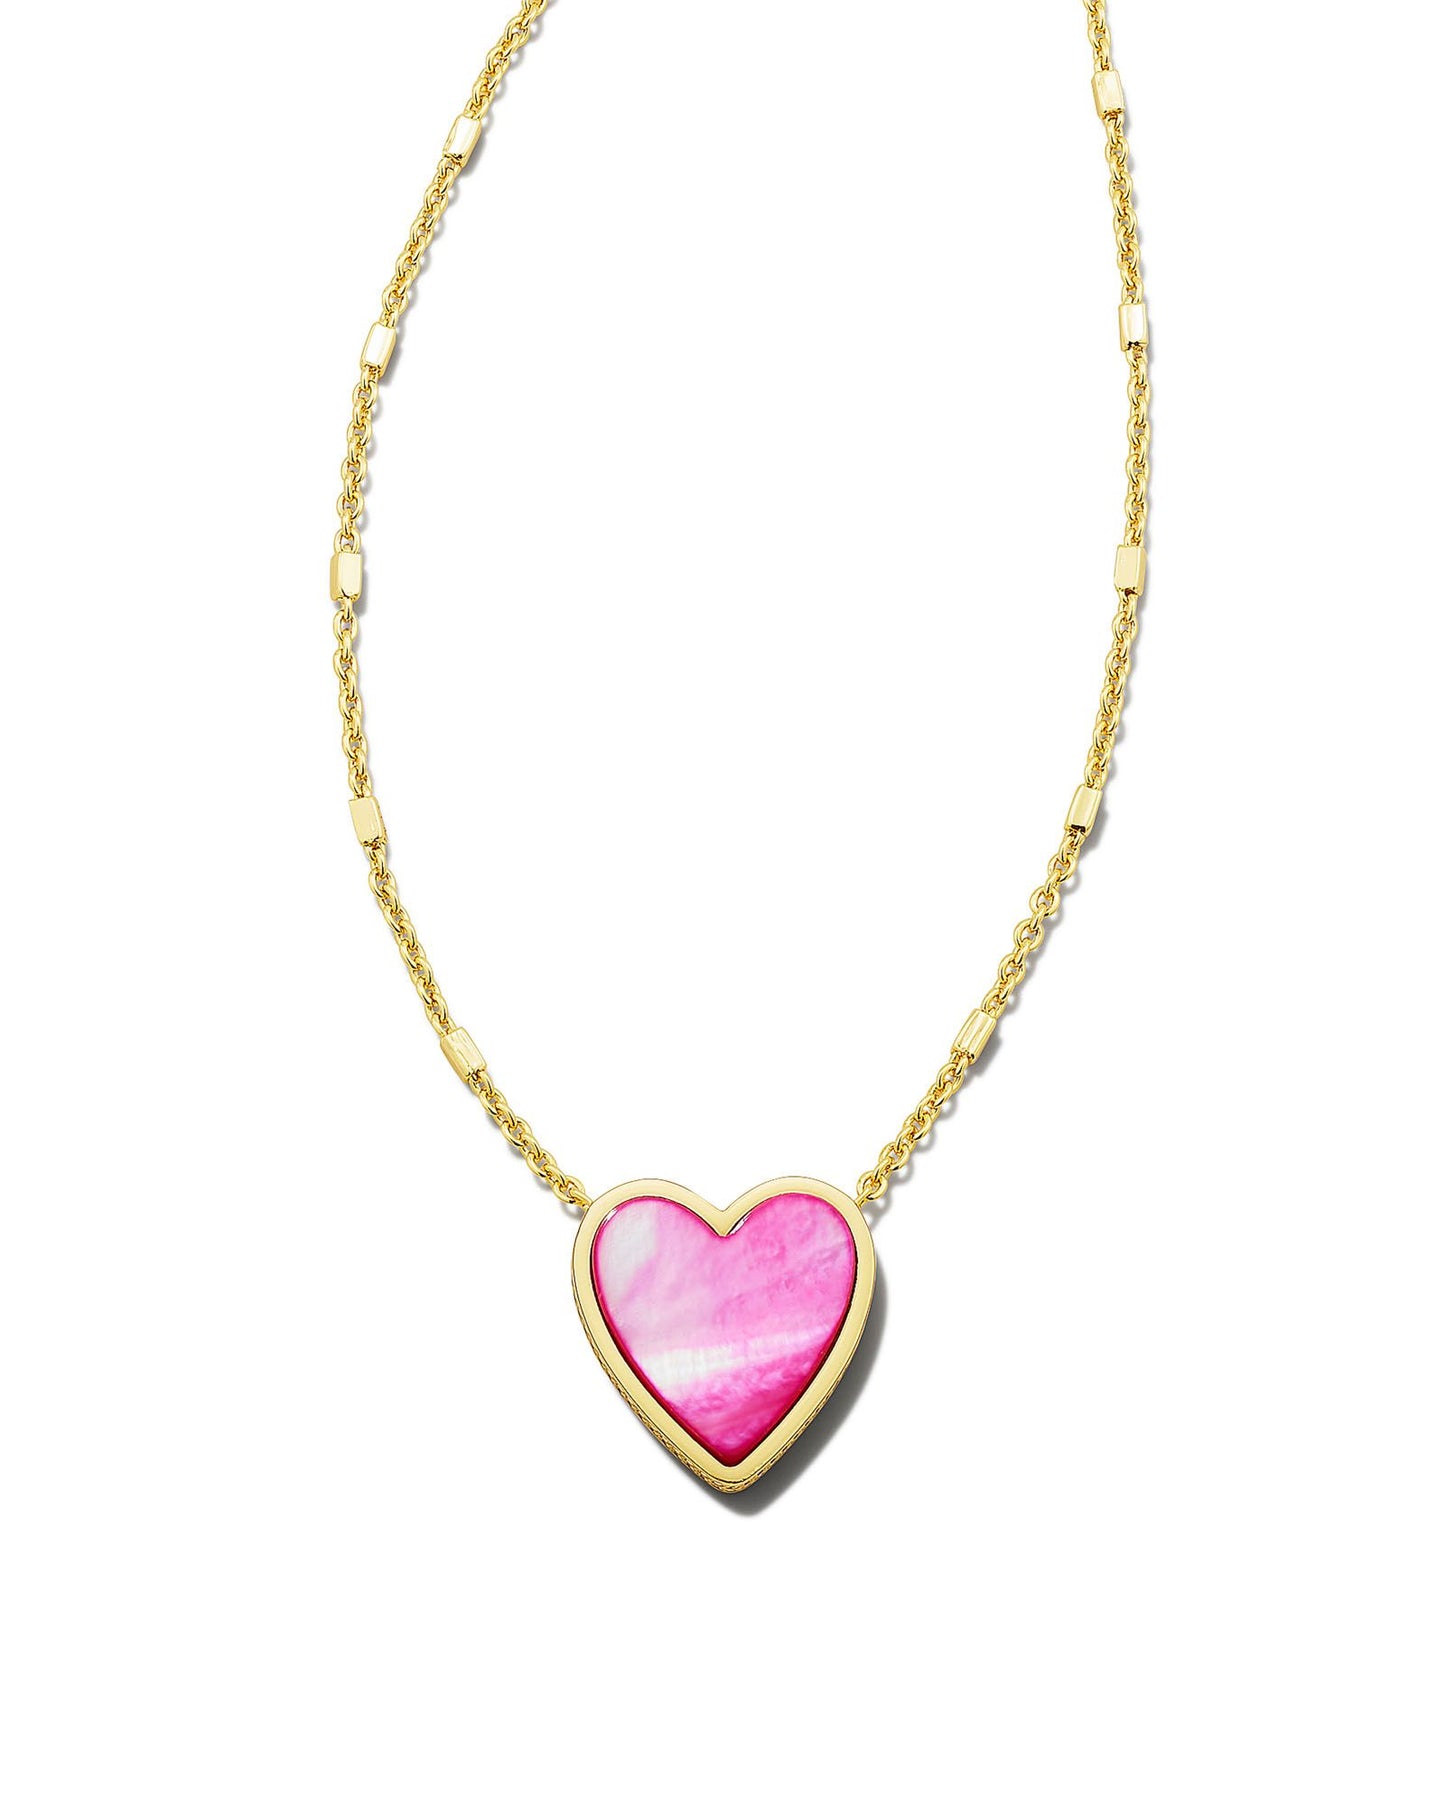 Kendra Scott Heart Pendant Necklace